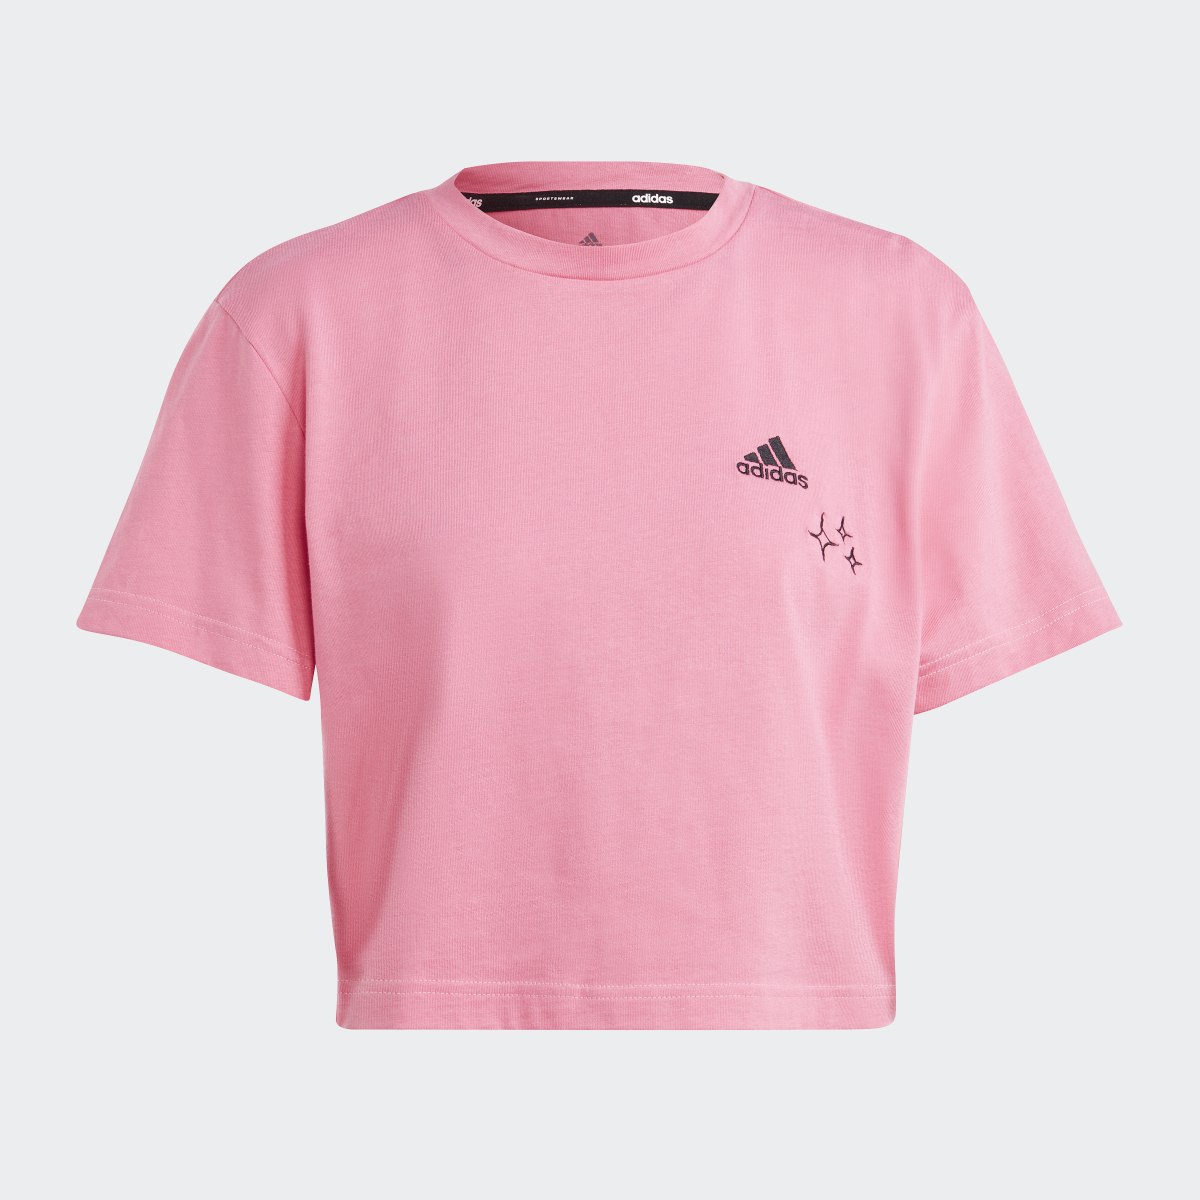 Adidas T-shirt Curta. 6